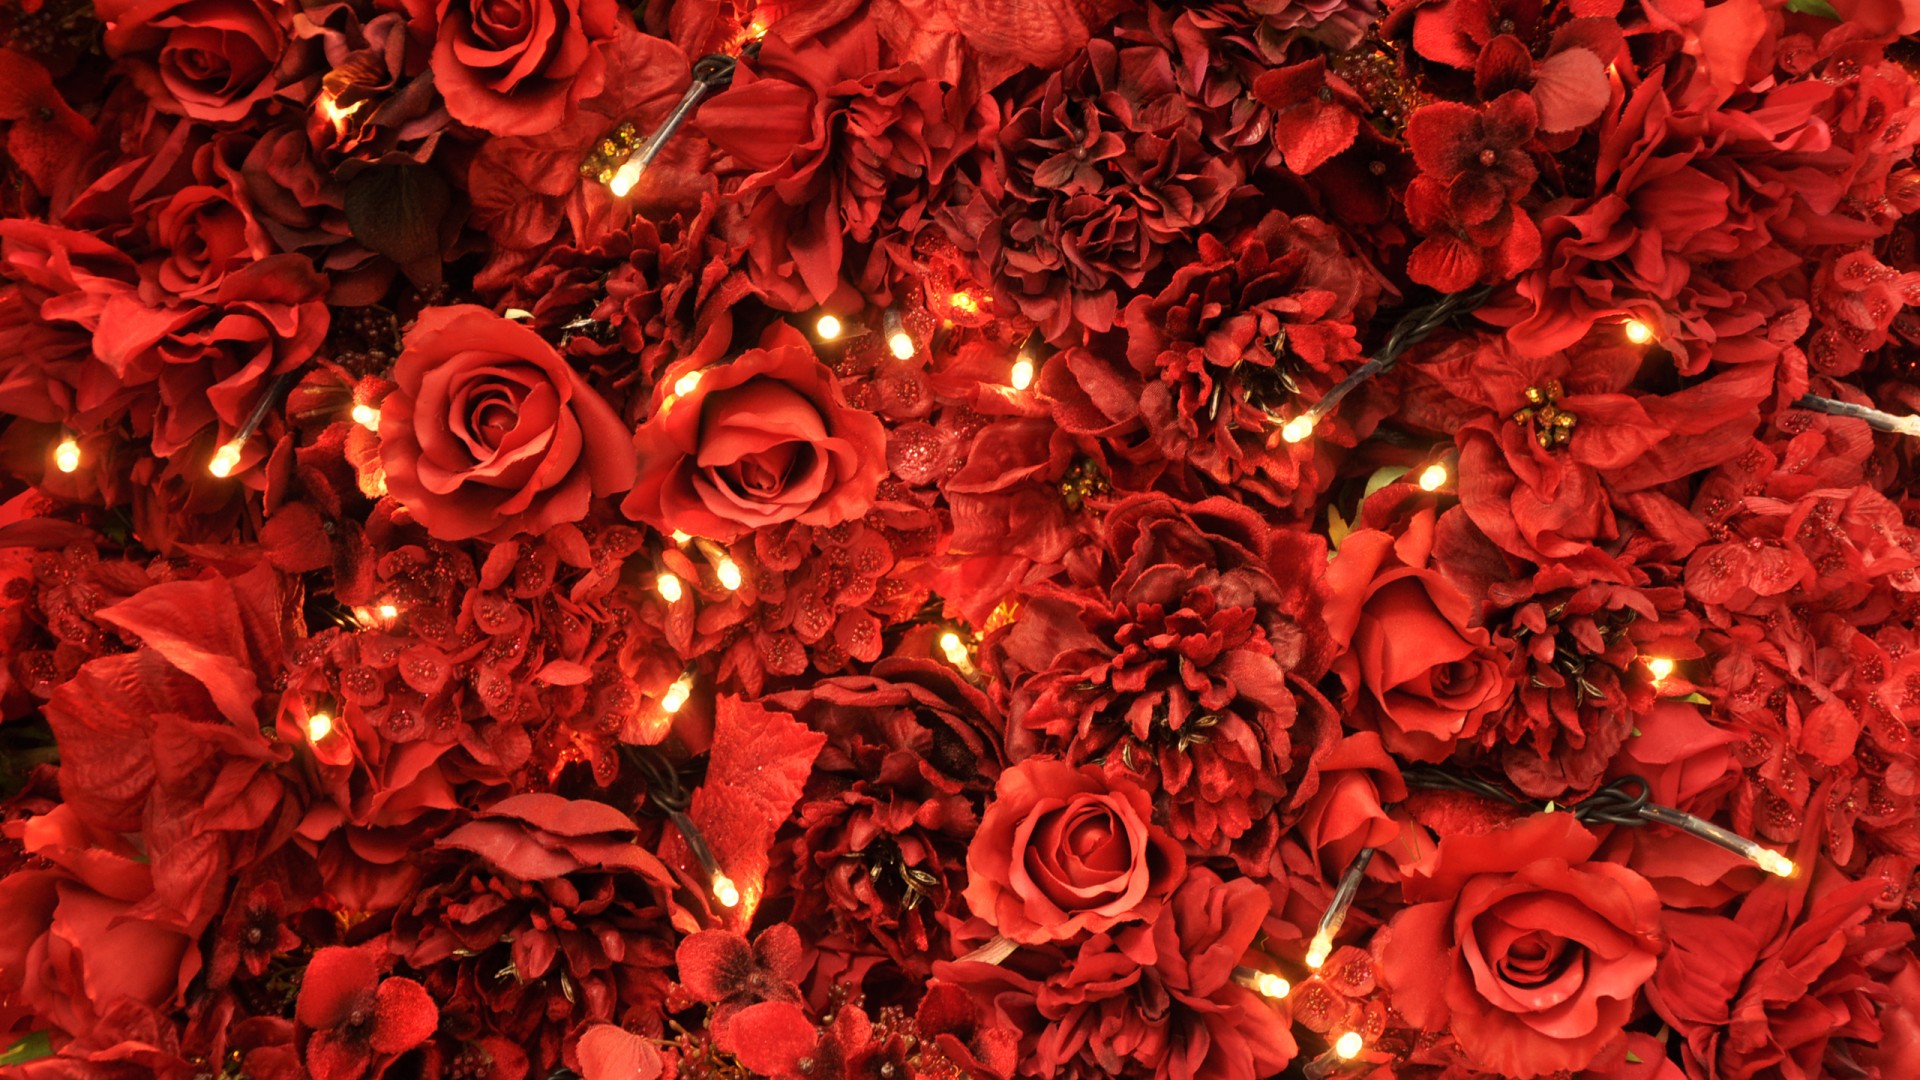 HD Flower Wallpaper Red Roses Lights